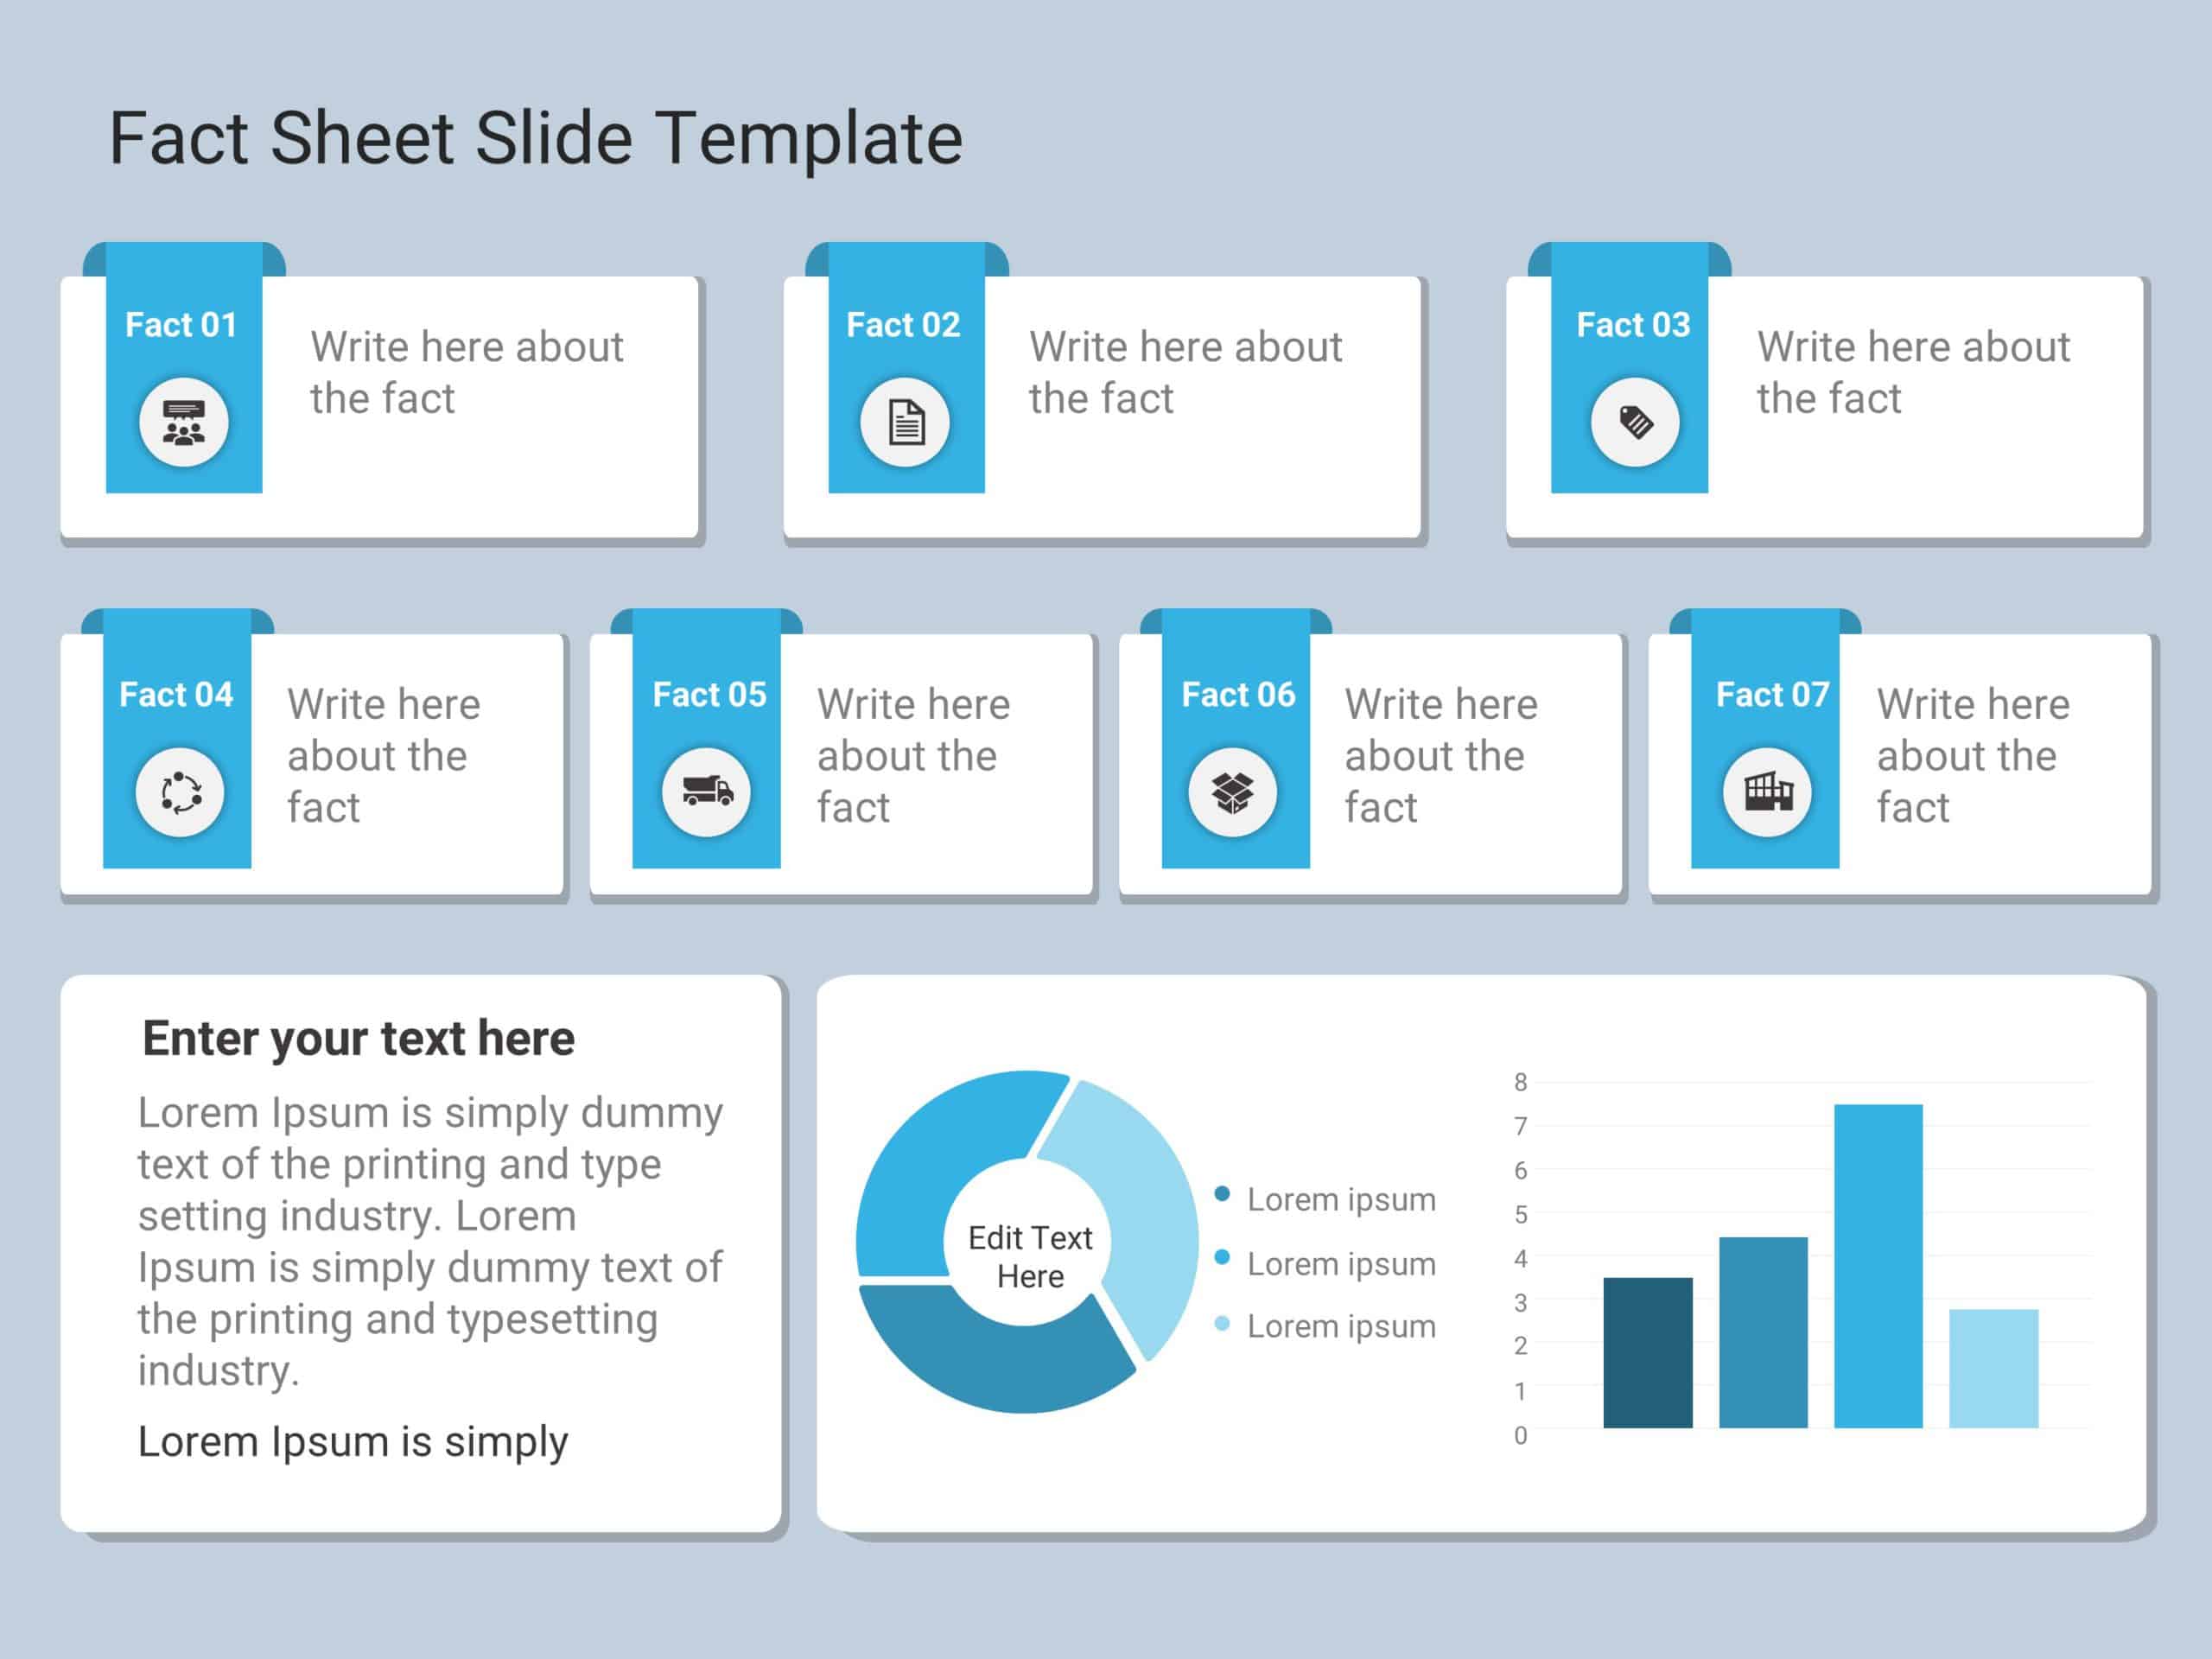 Executive Summary Templates for PowerPoint & Google Slides Theme